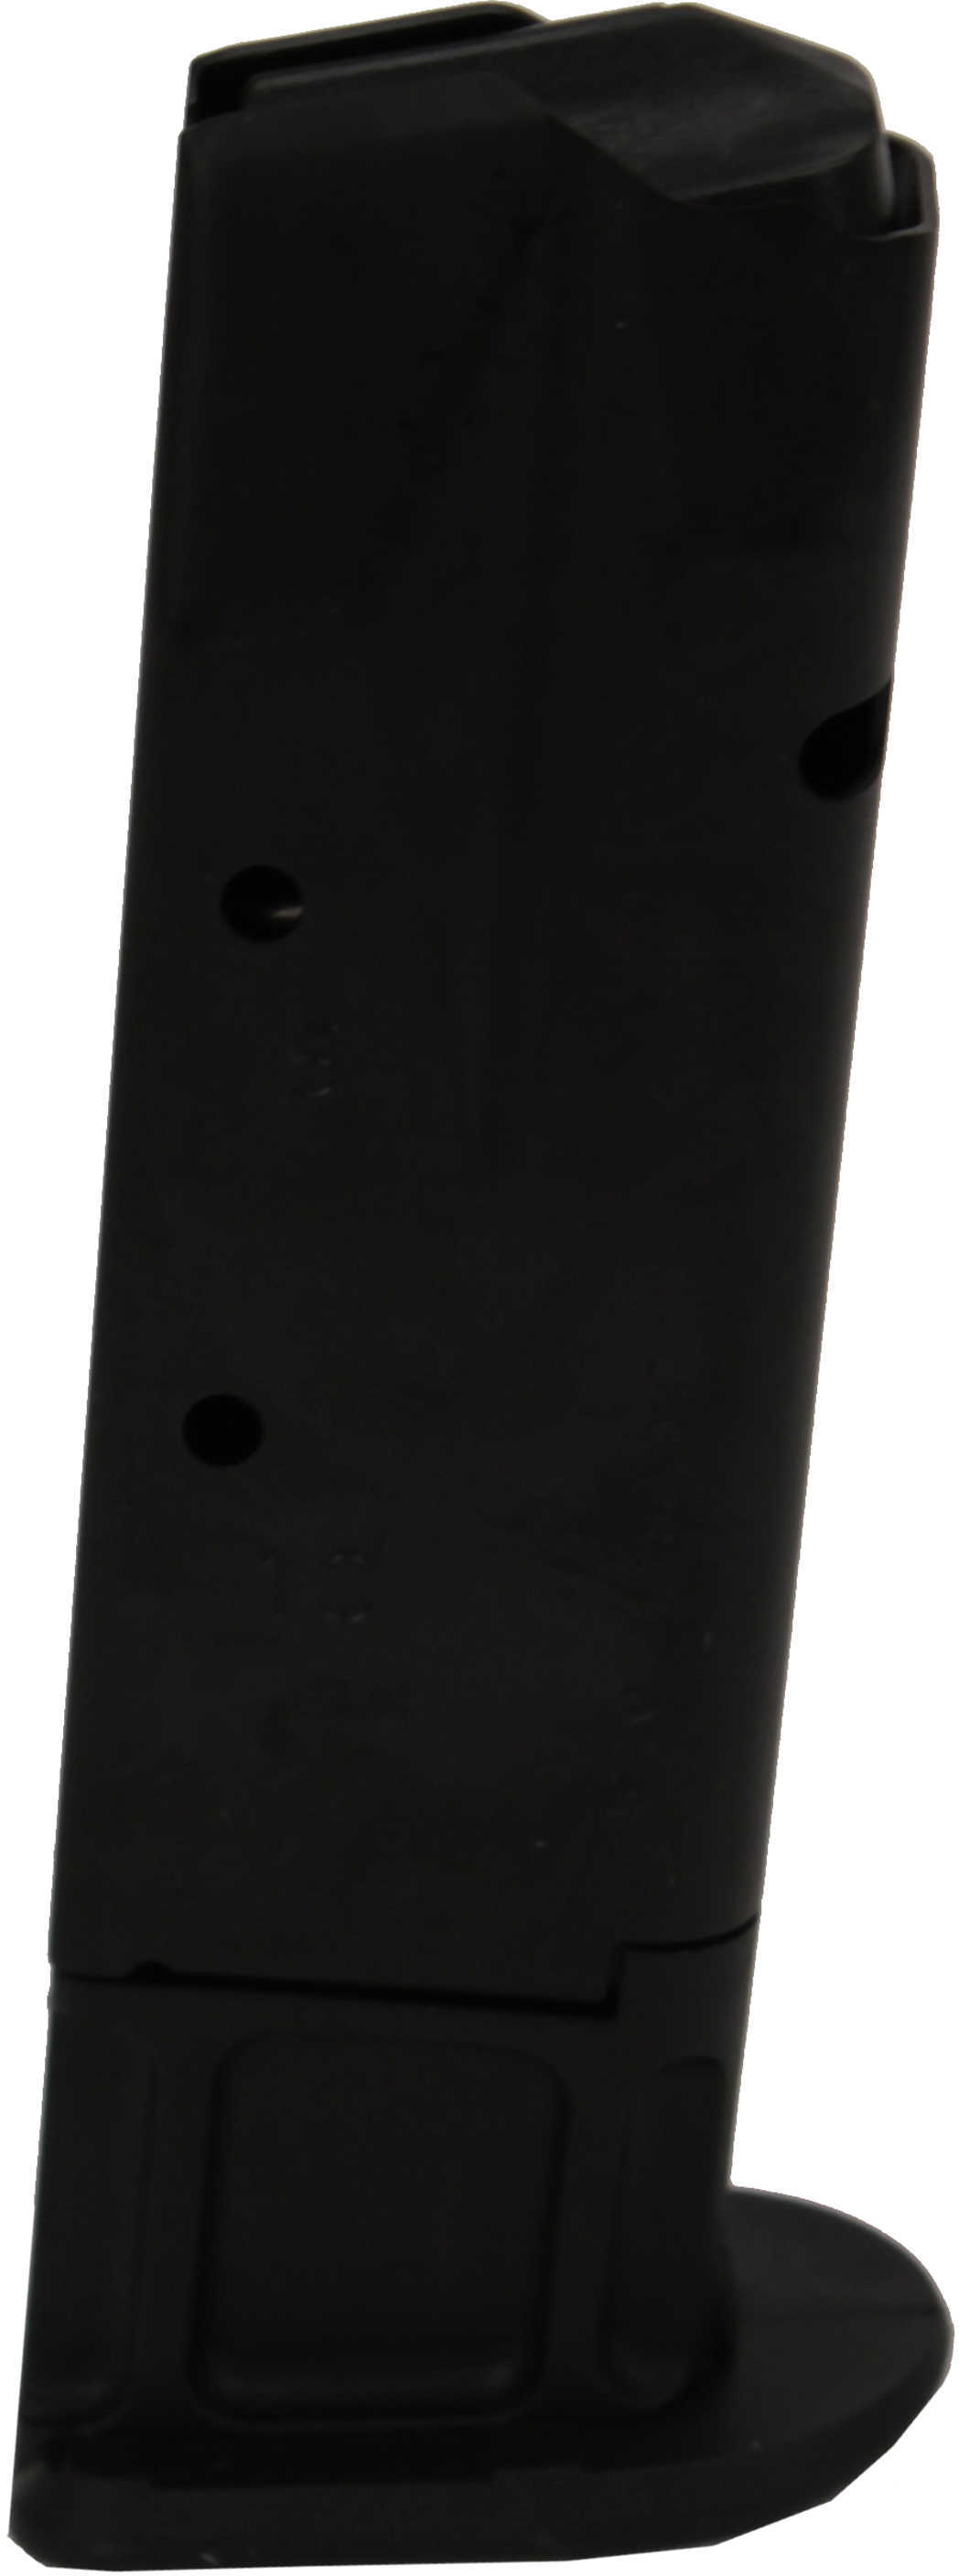 Walther PPQ M1 Classic Magazine 9mm Black 10/Rd